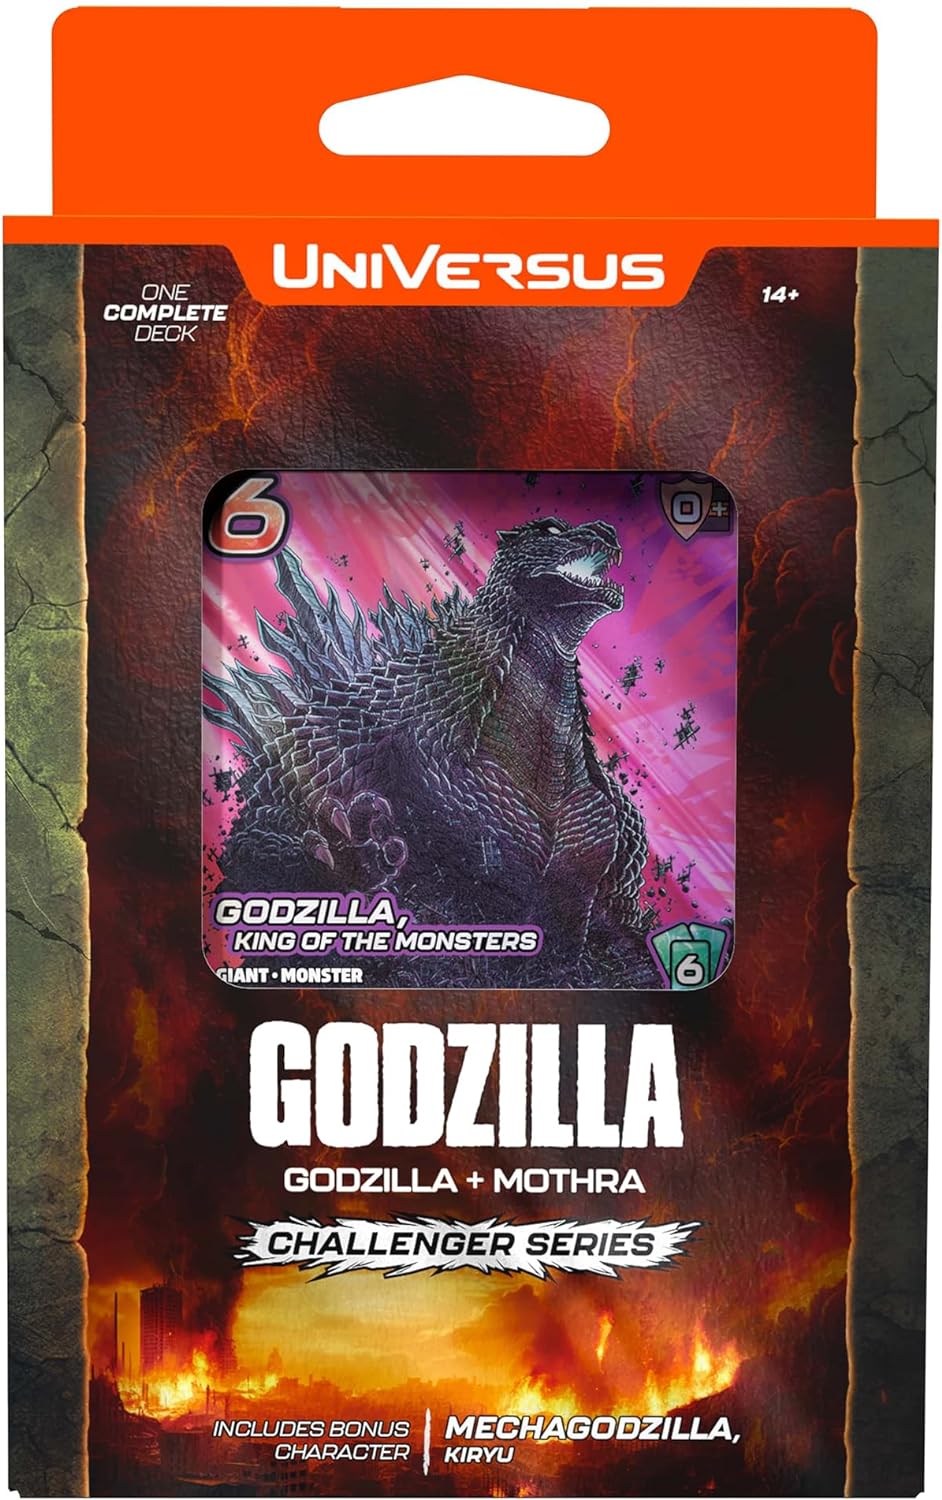 UniVersus Godzilla Challenger Series - Godzilla & Mothra Deck | CCGPrime